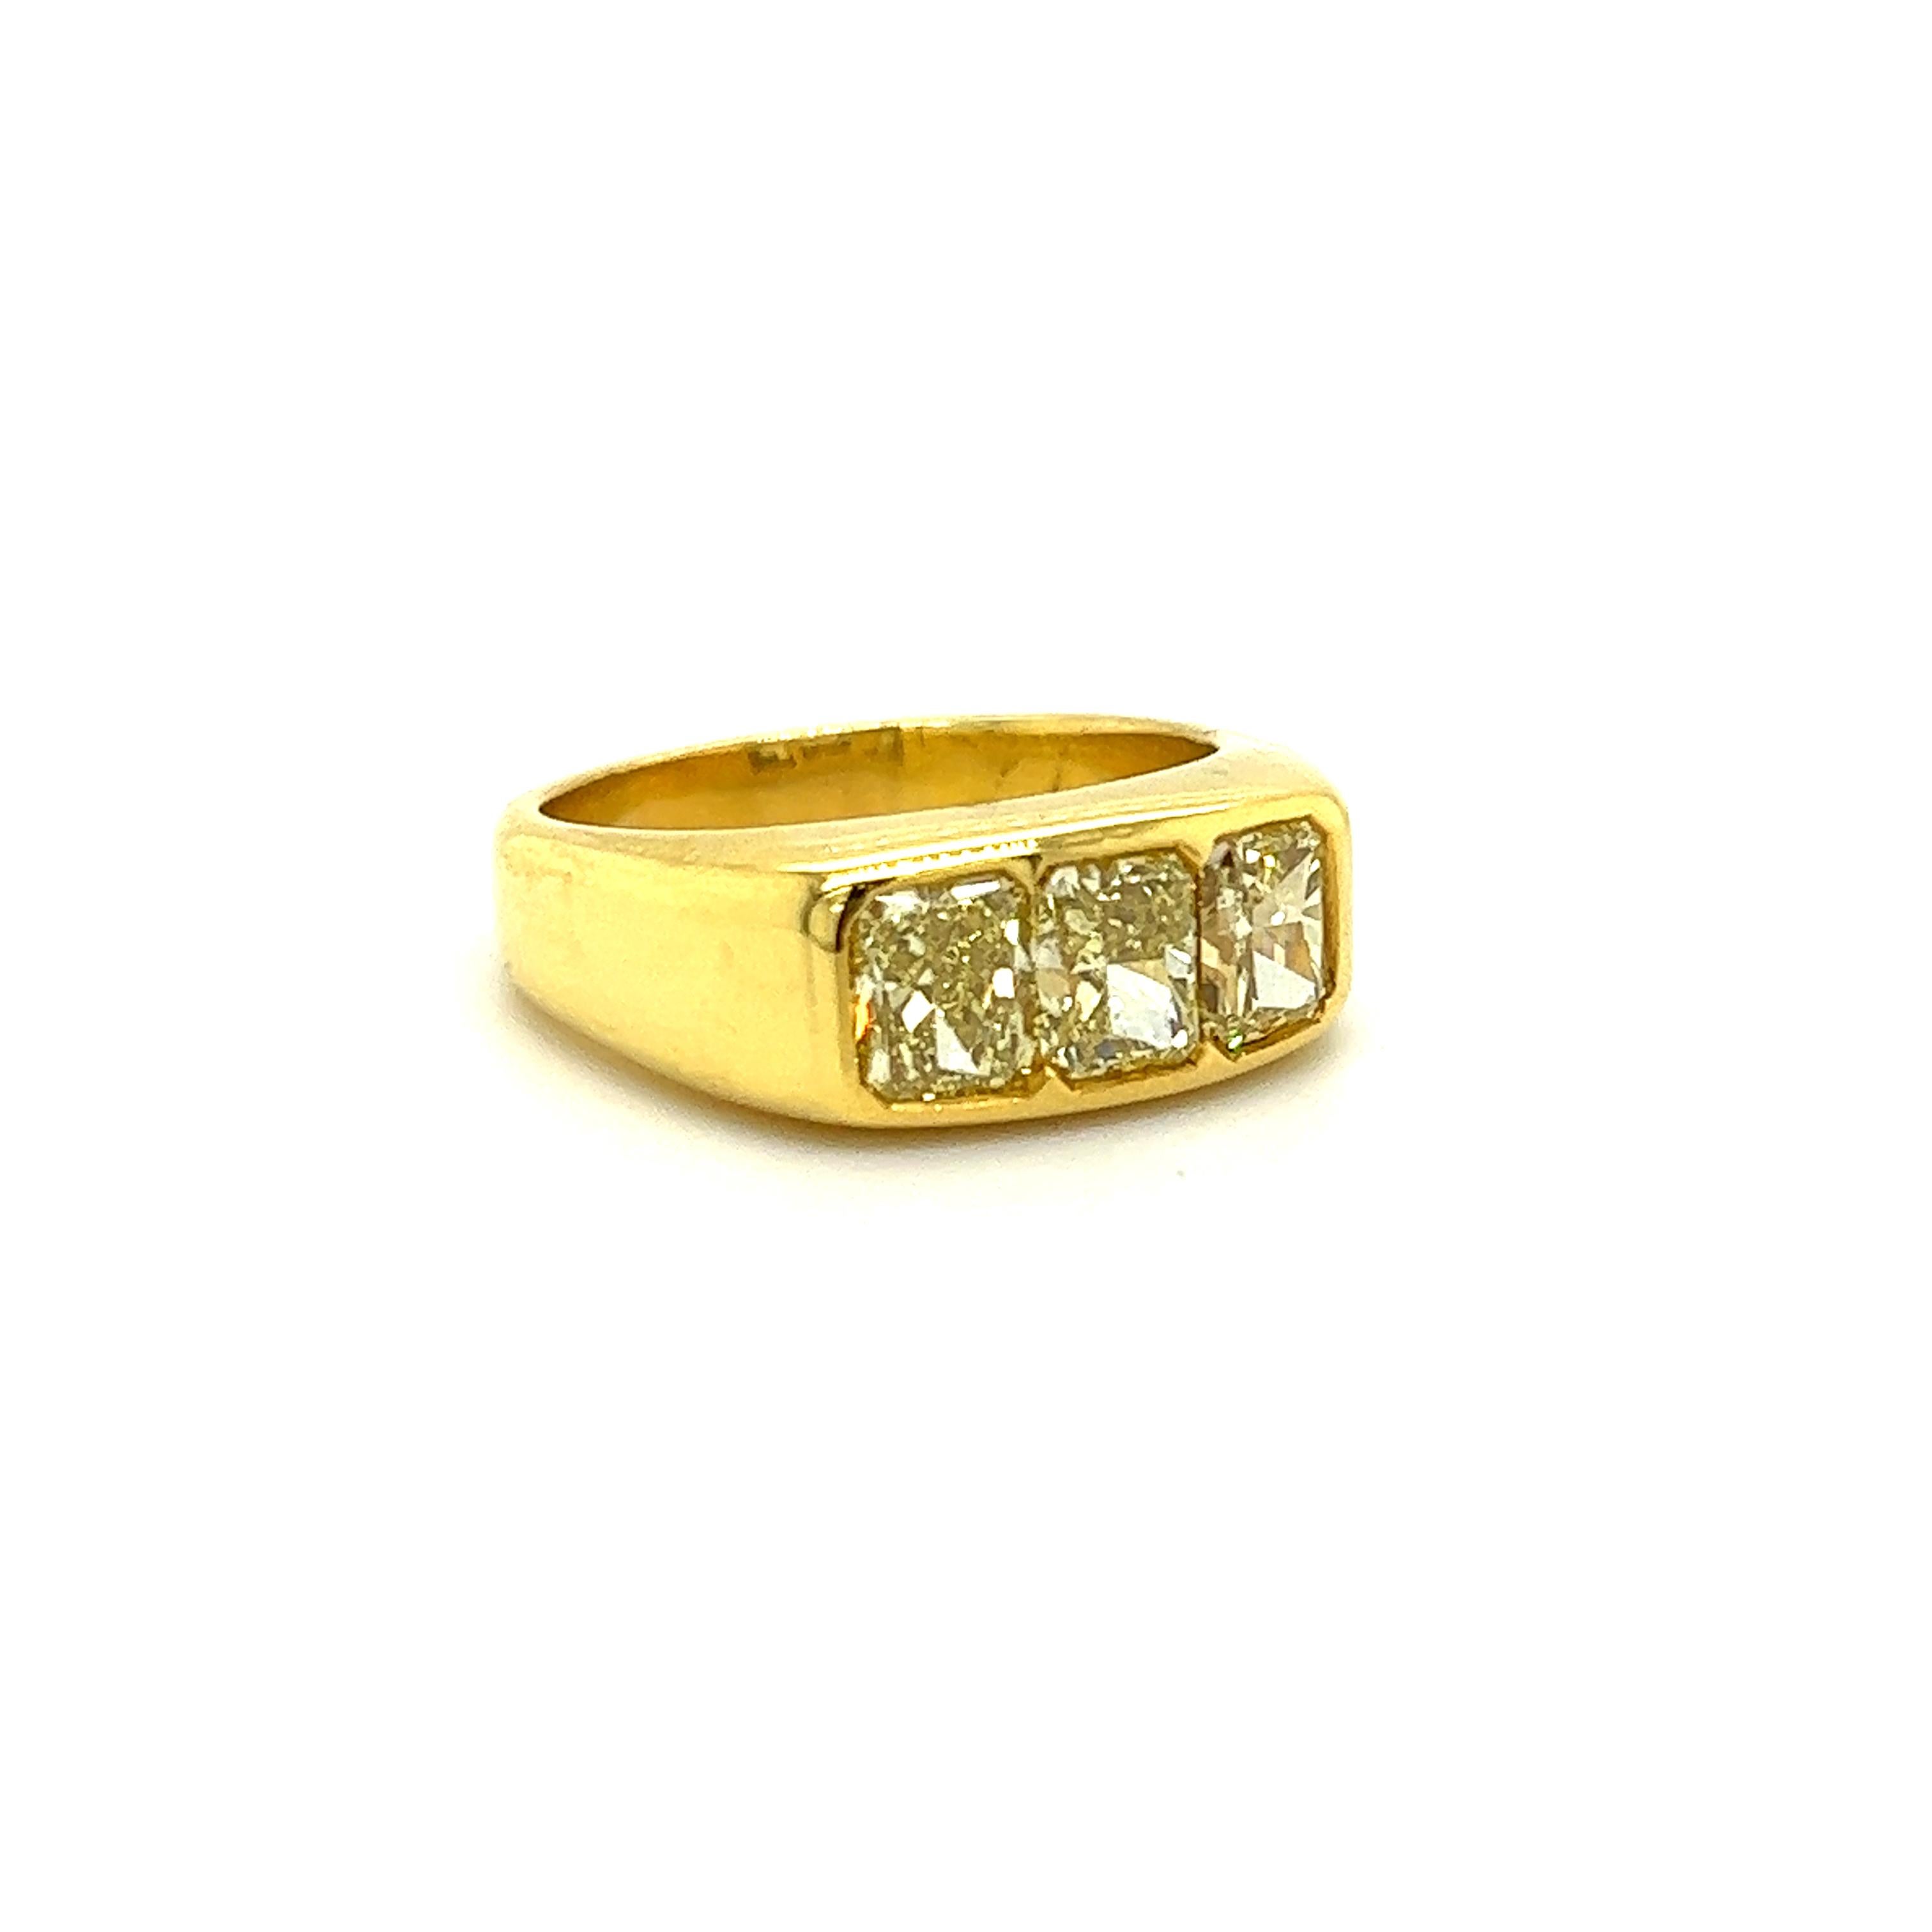 Contemporary Estate Men's Fancy Yellow Diamond Ring Size 9.5 18k Yellow Gold 3.00 Carat